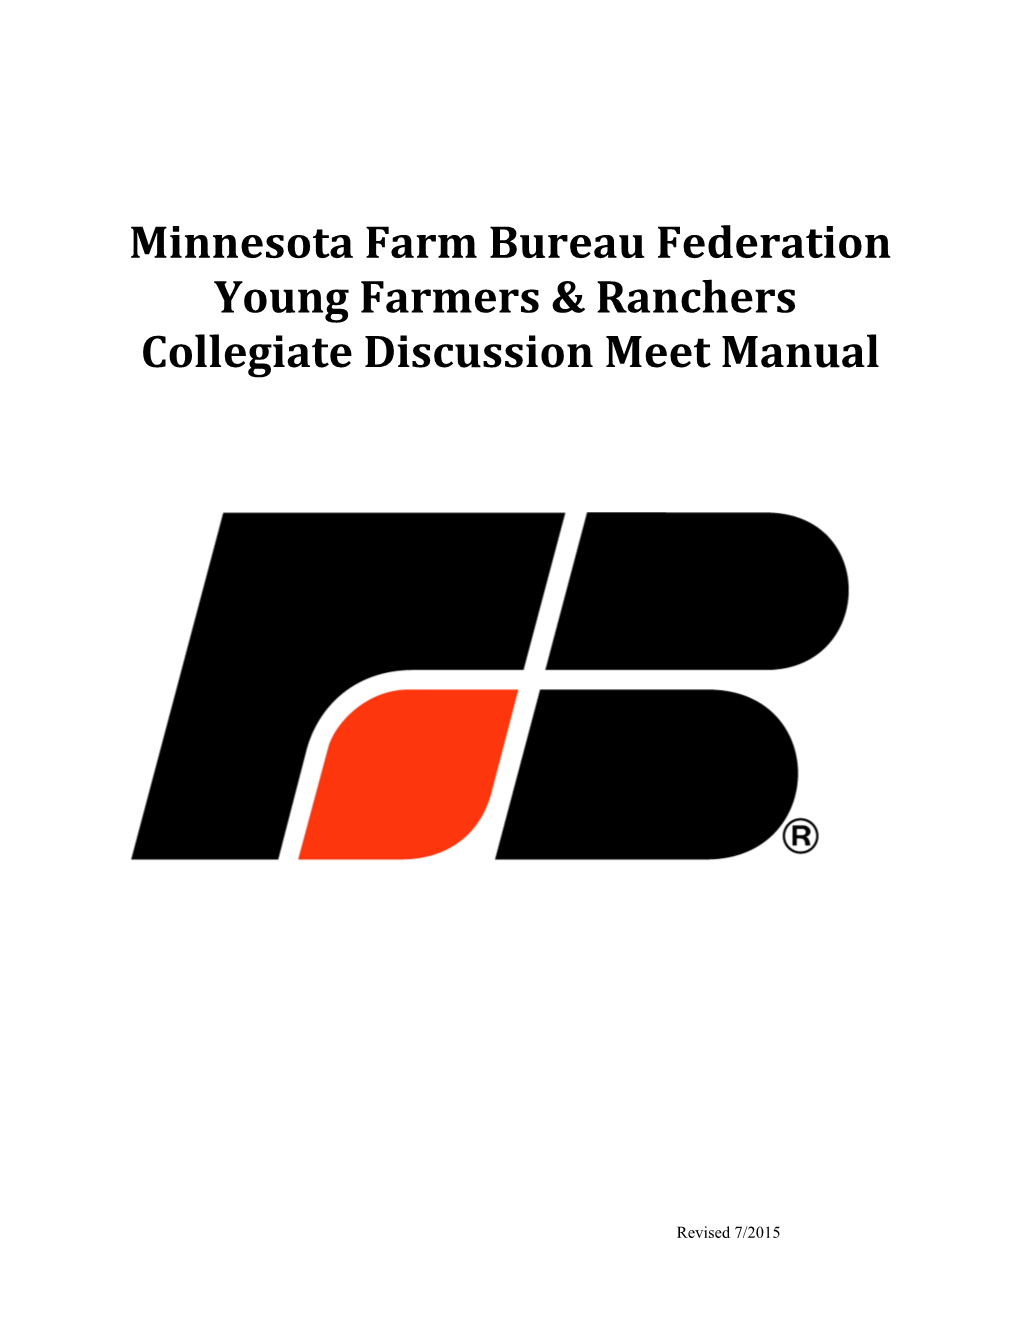 Minnesotafarm Bureau Federation